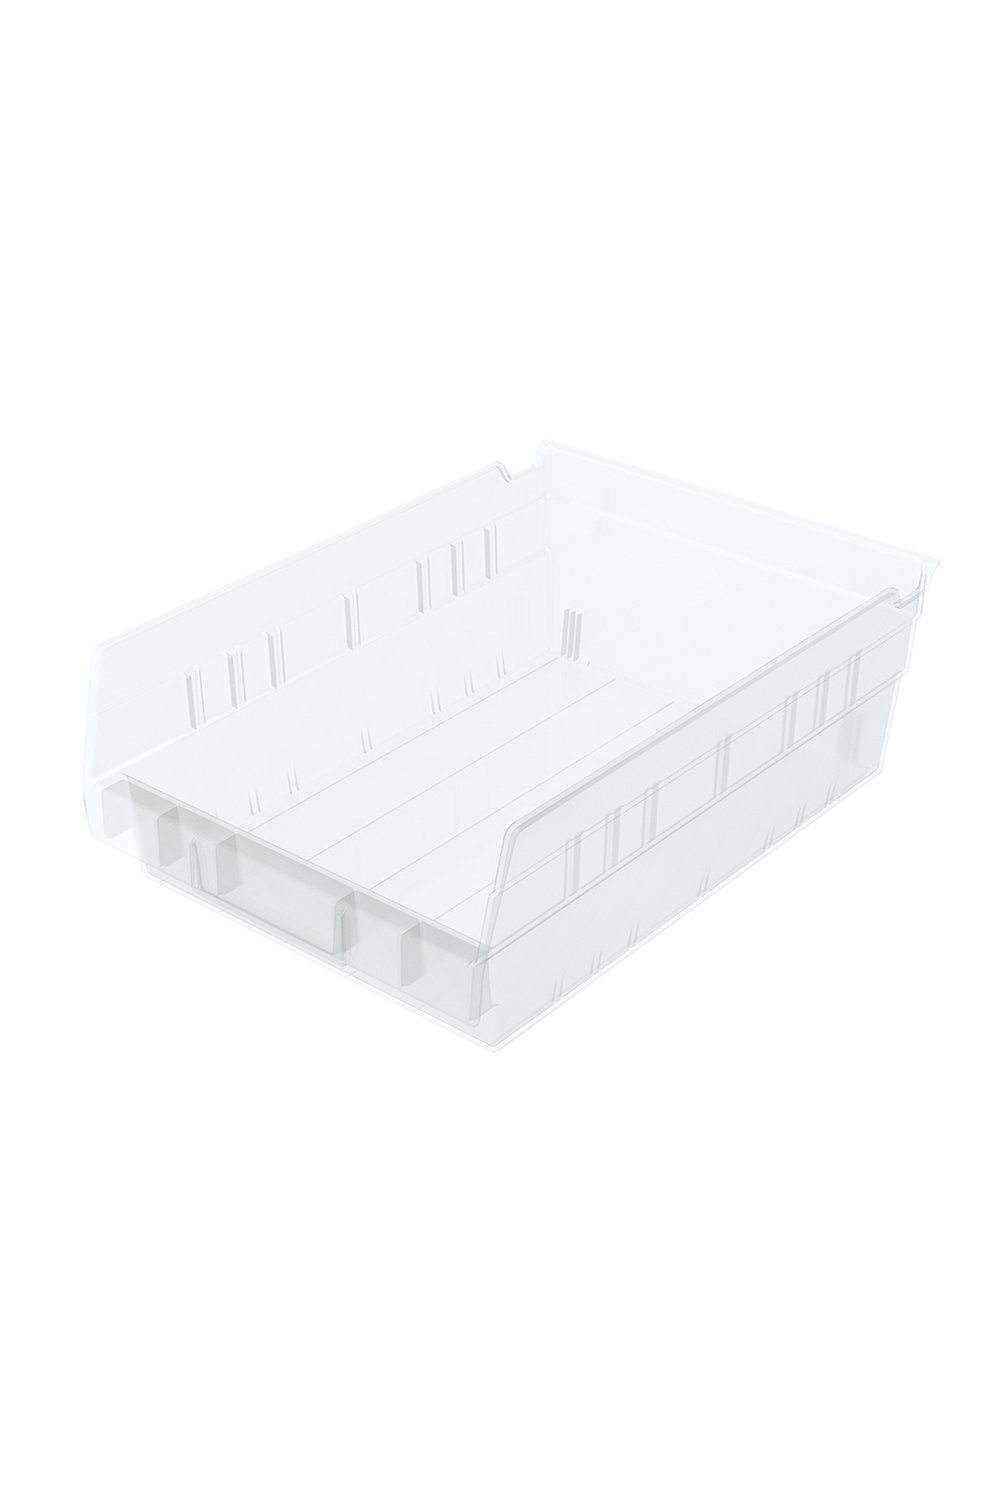 Shelf Bin for 12"D Shelves Bins & Containers Acart 11-5/8'' x 8-3/8'' x 4'' Clear 